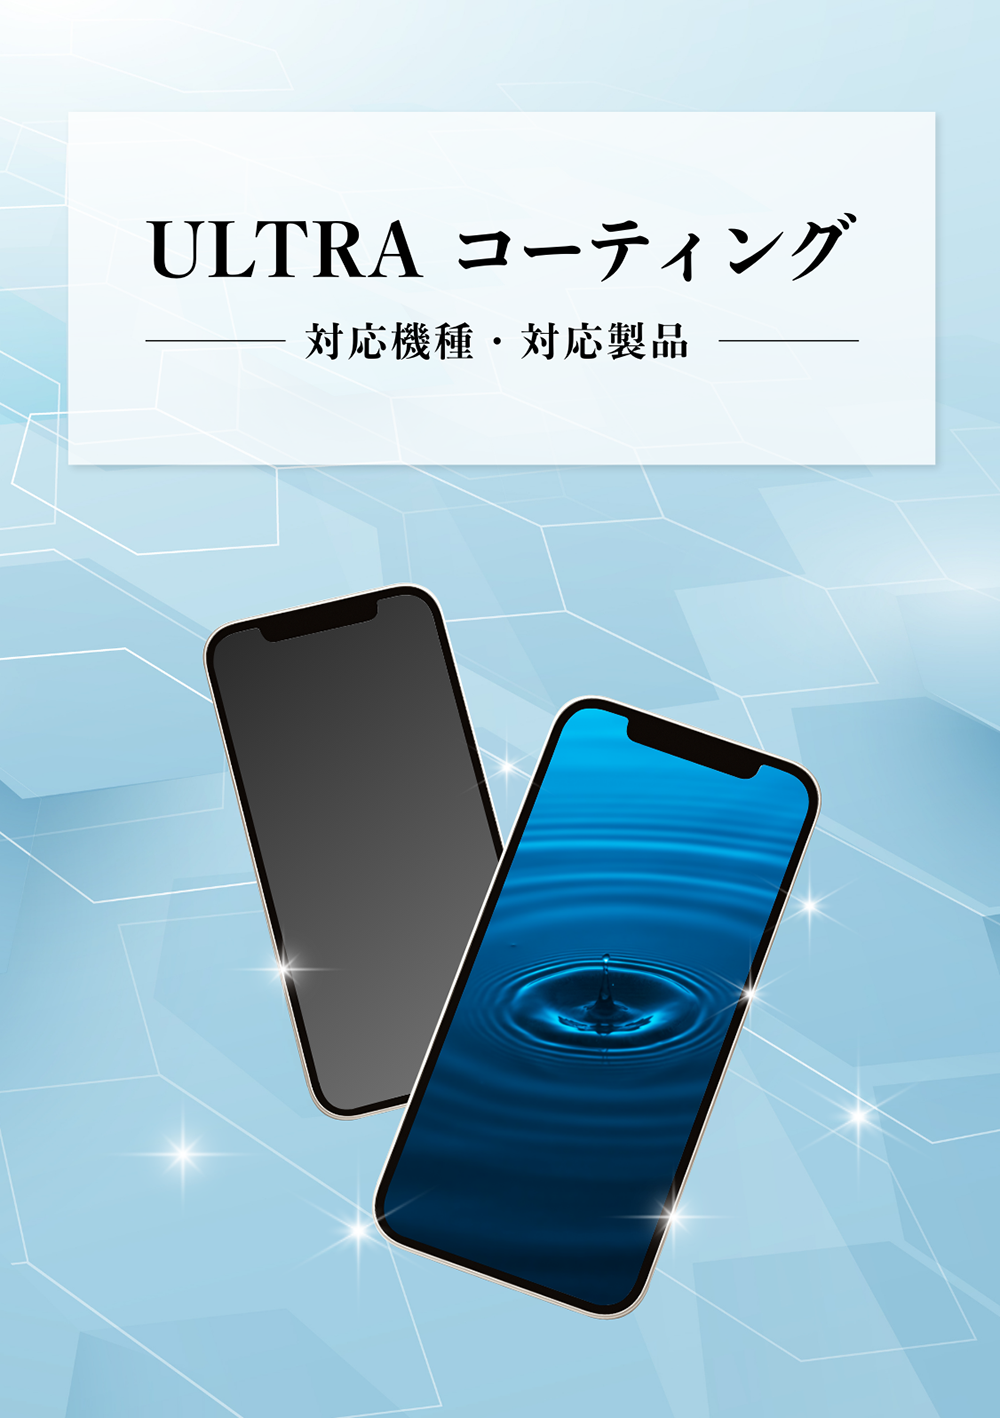 ULTRA コーティング 対応機種・対応製品